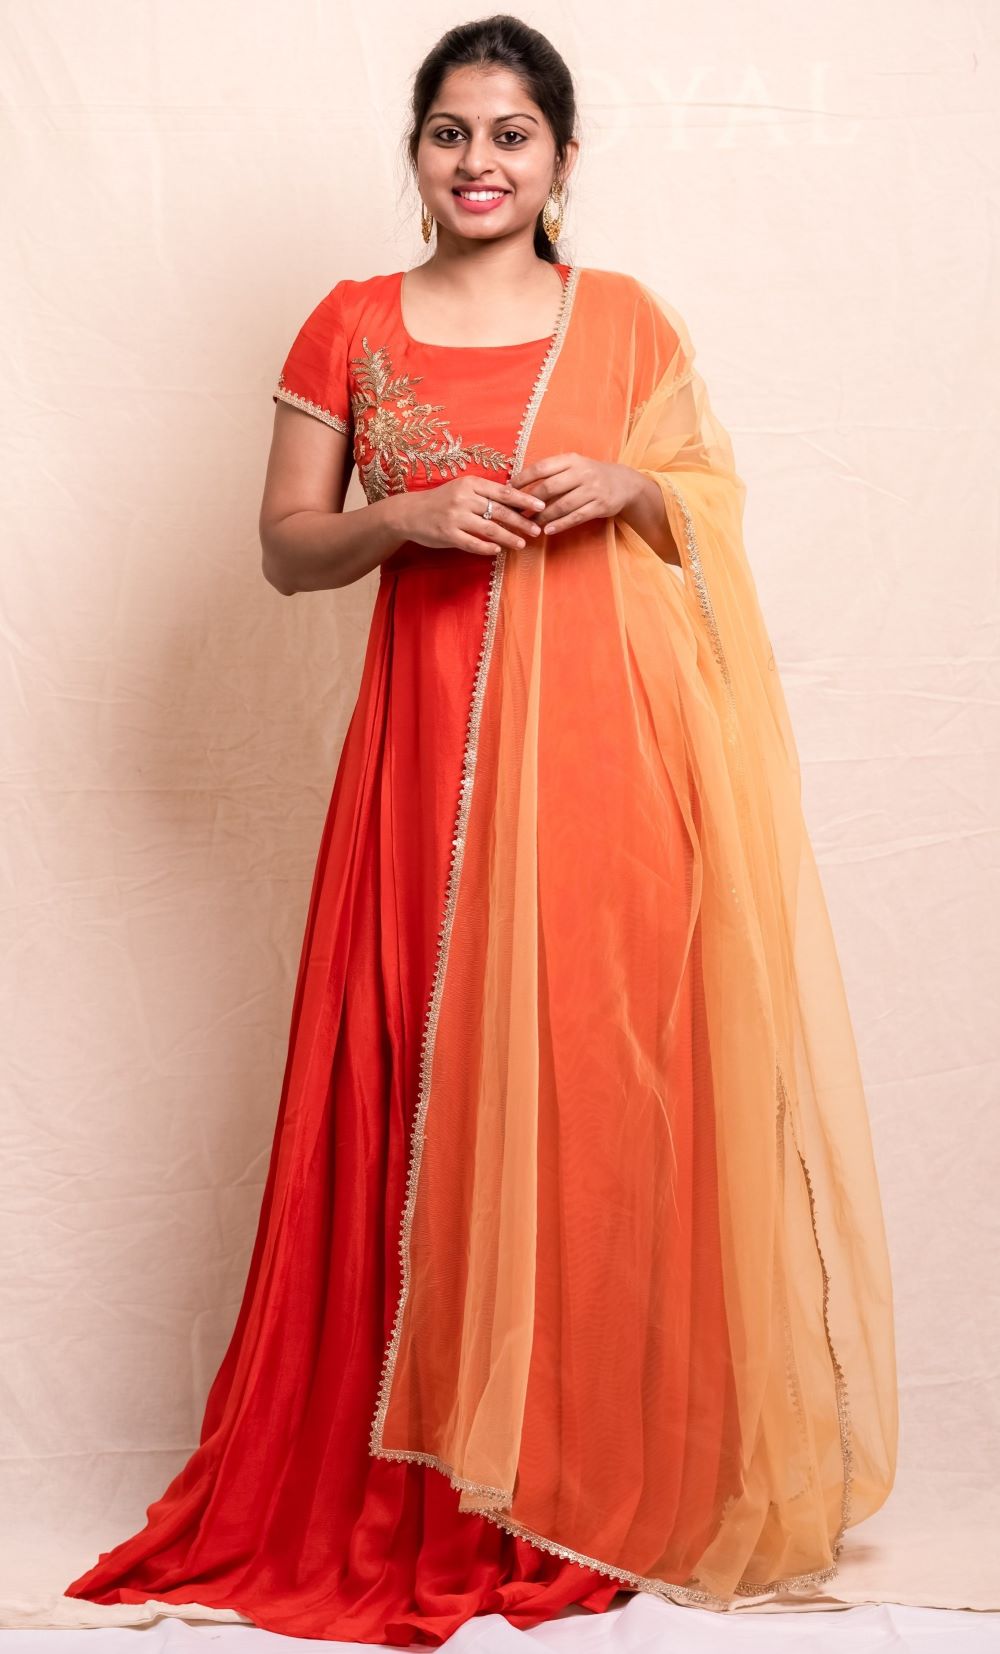 Orange long dress with a hand emdroidered body and a contrast light orange dupatta